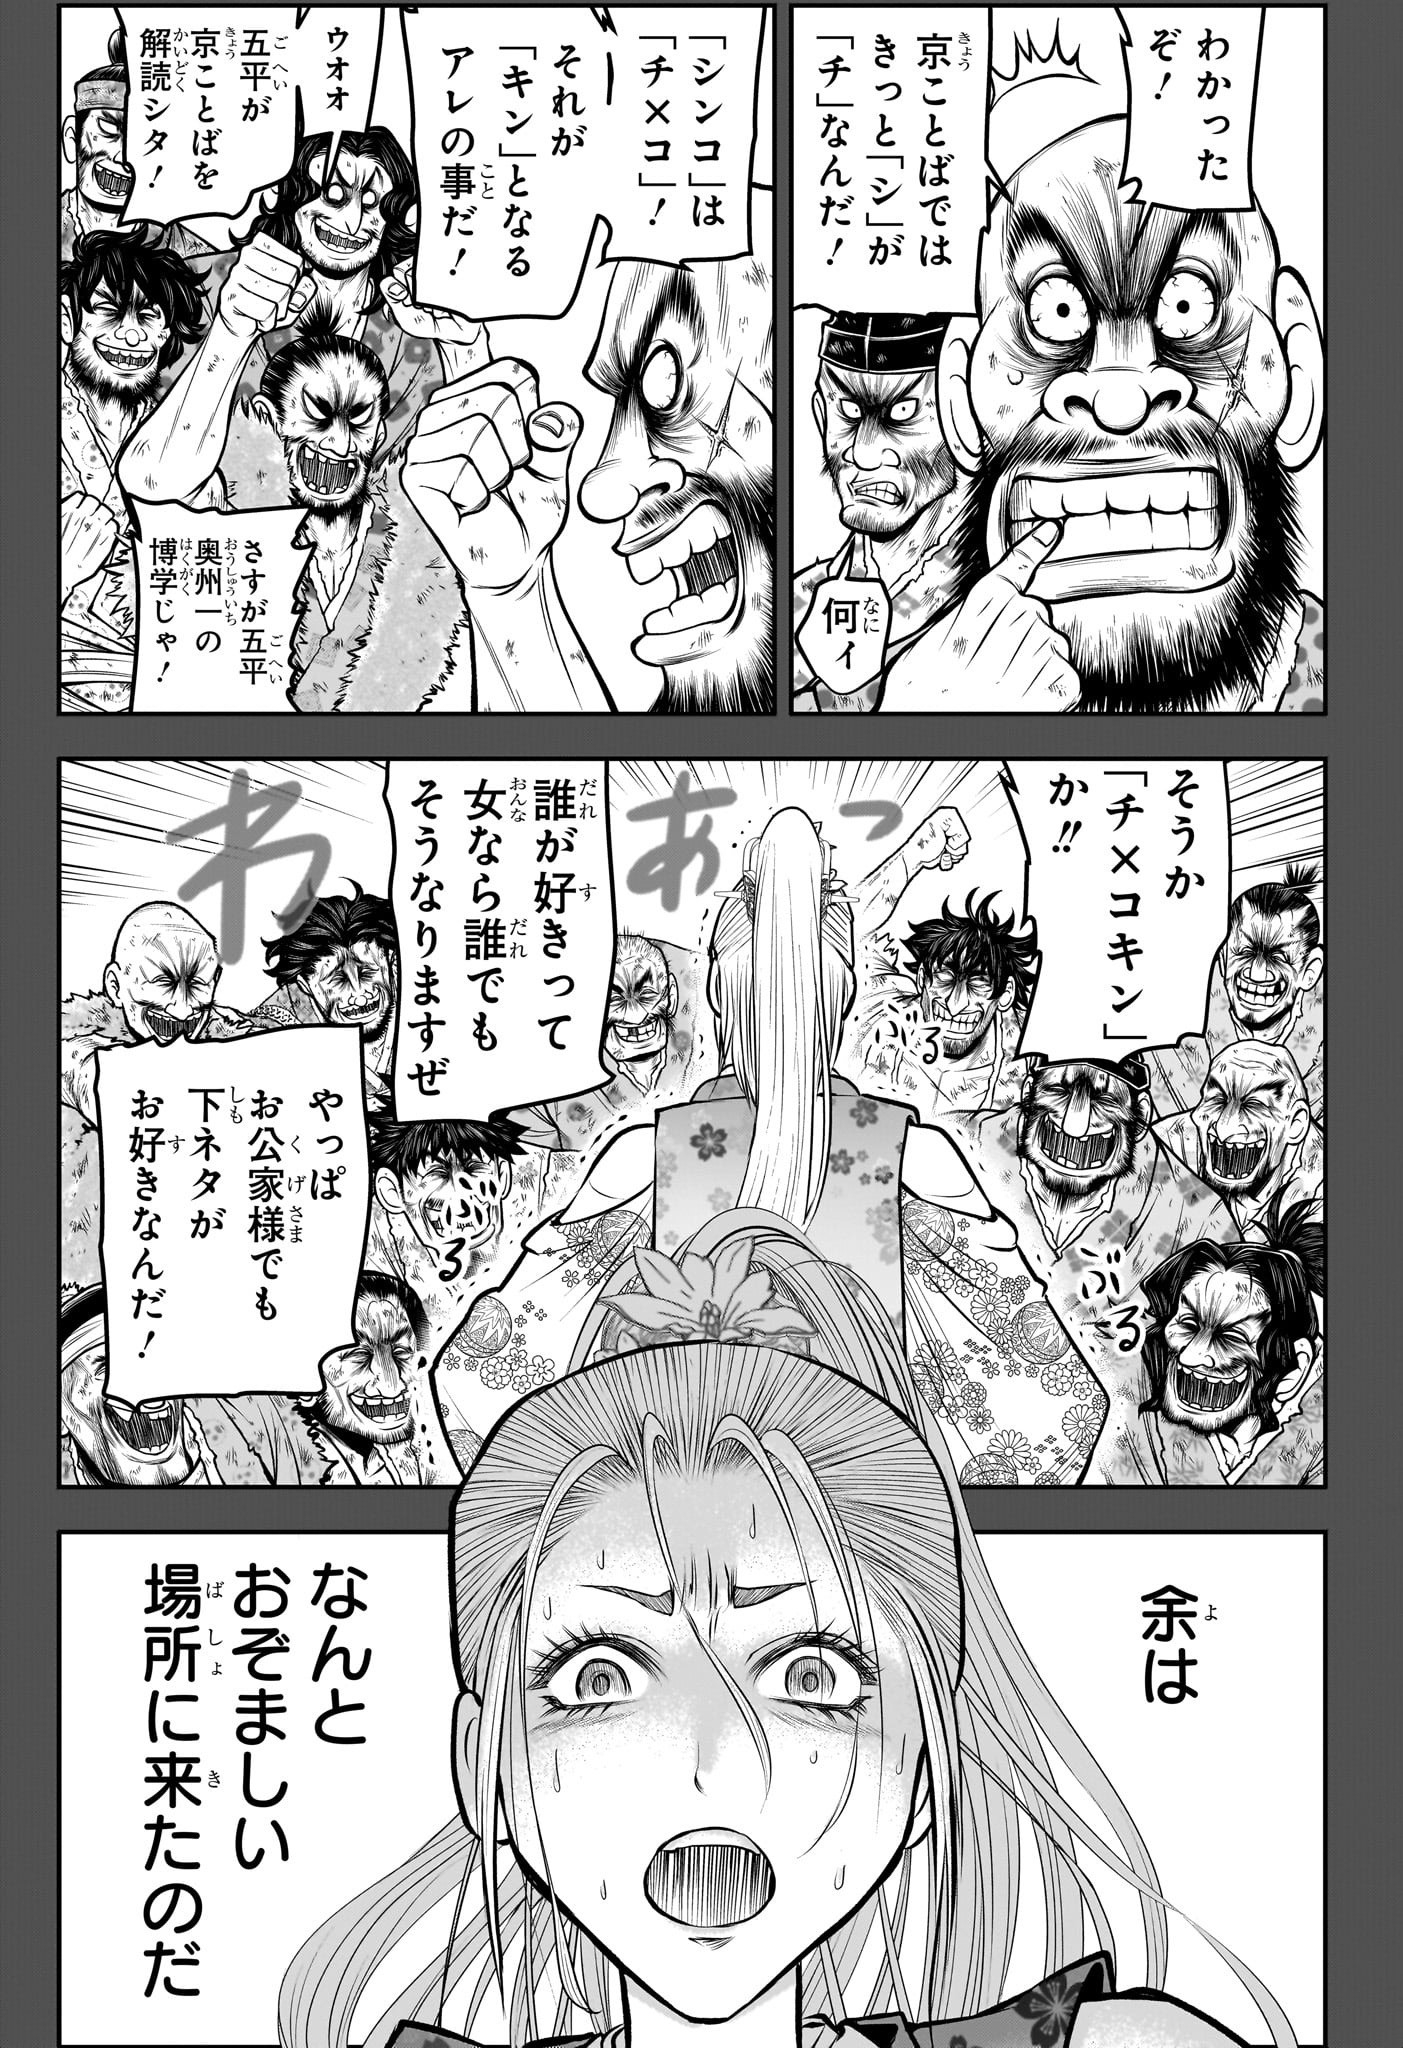 Nige Jouzu no Wakagimi - Chapter 136 - Page 3